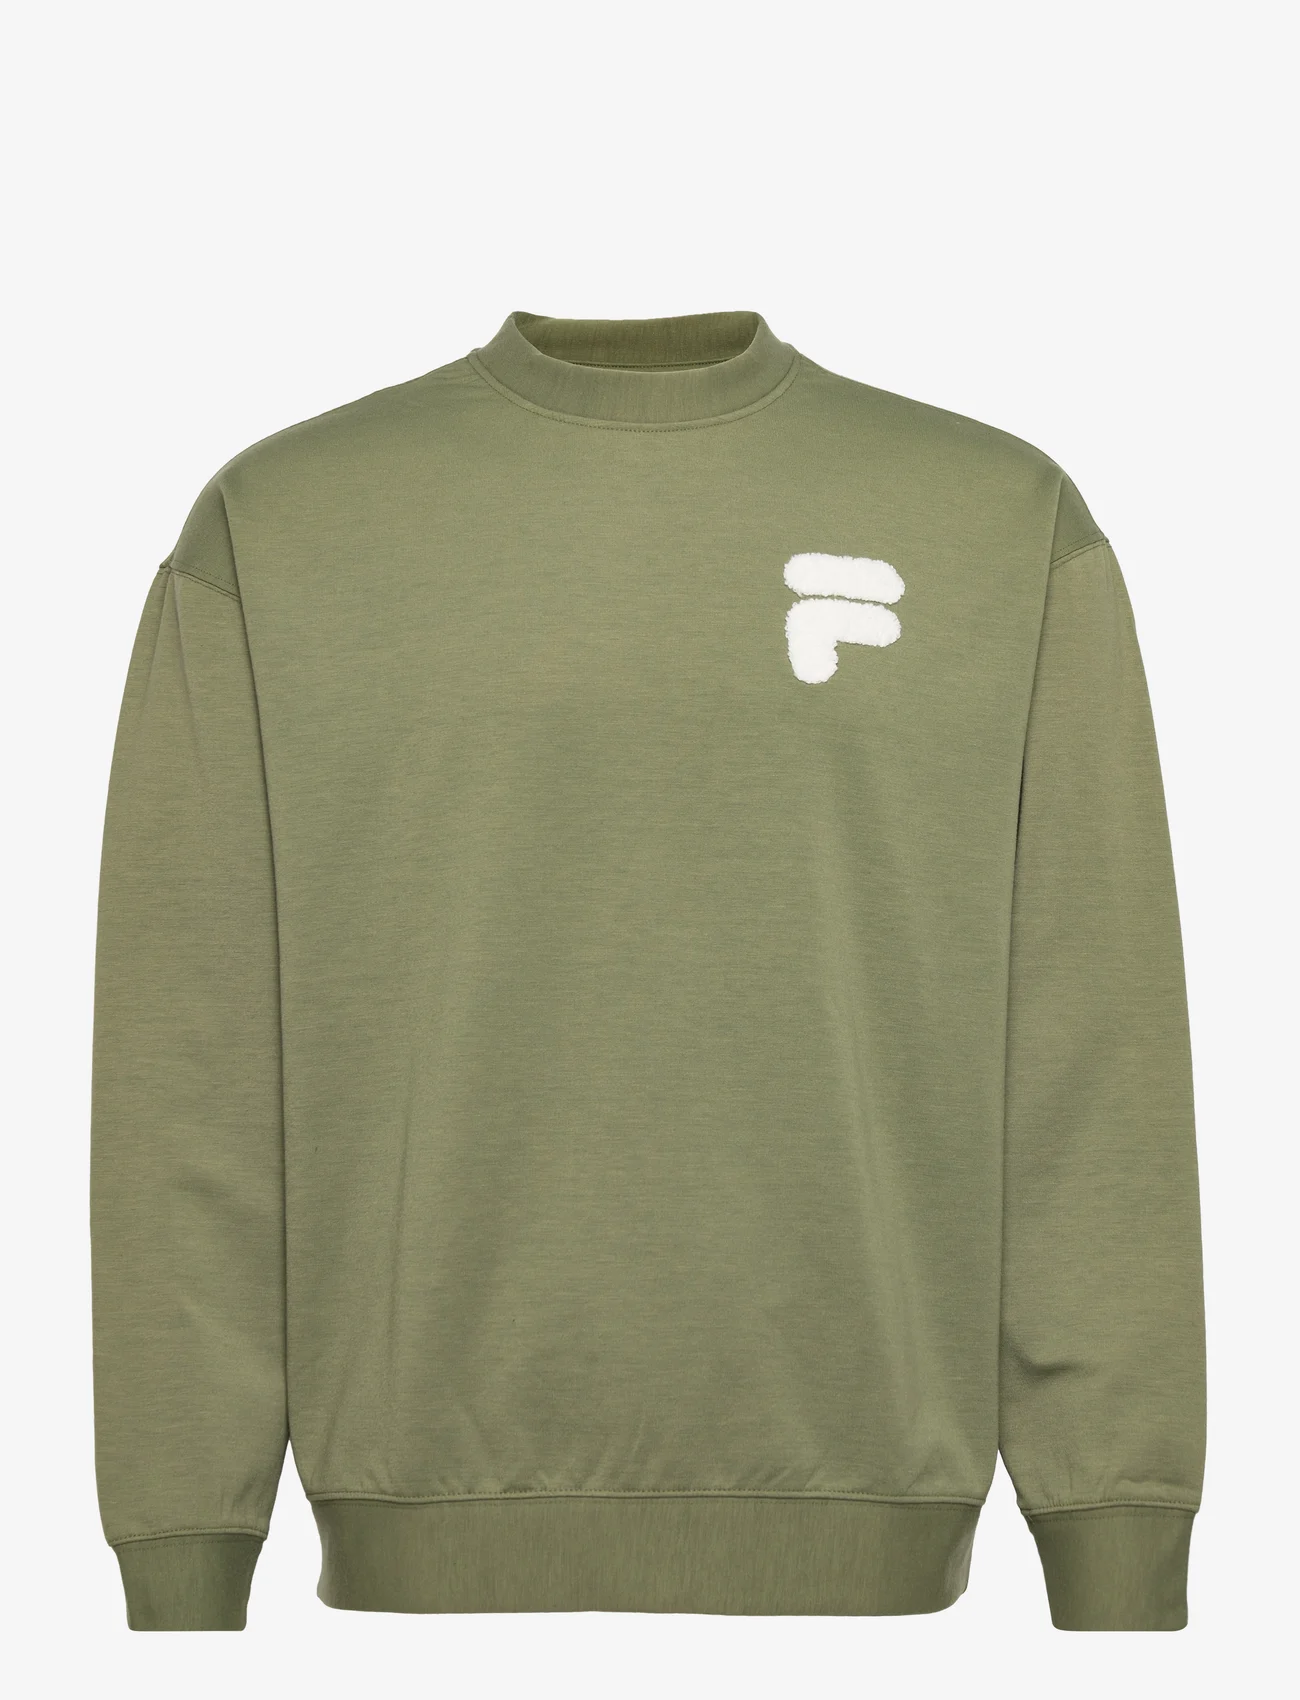 FILA - COSENZA sweat shirt - sweatshirts - loden green - 0